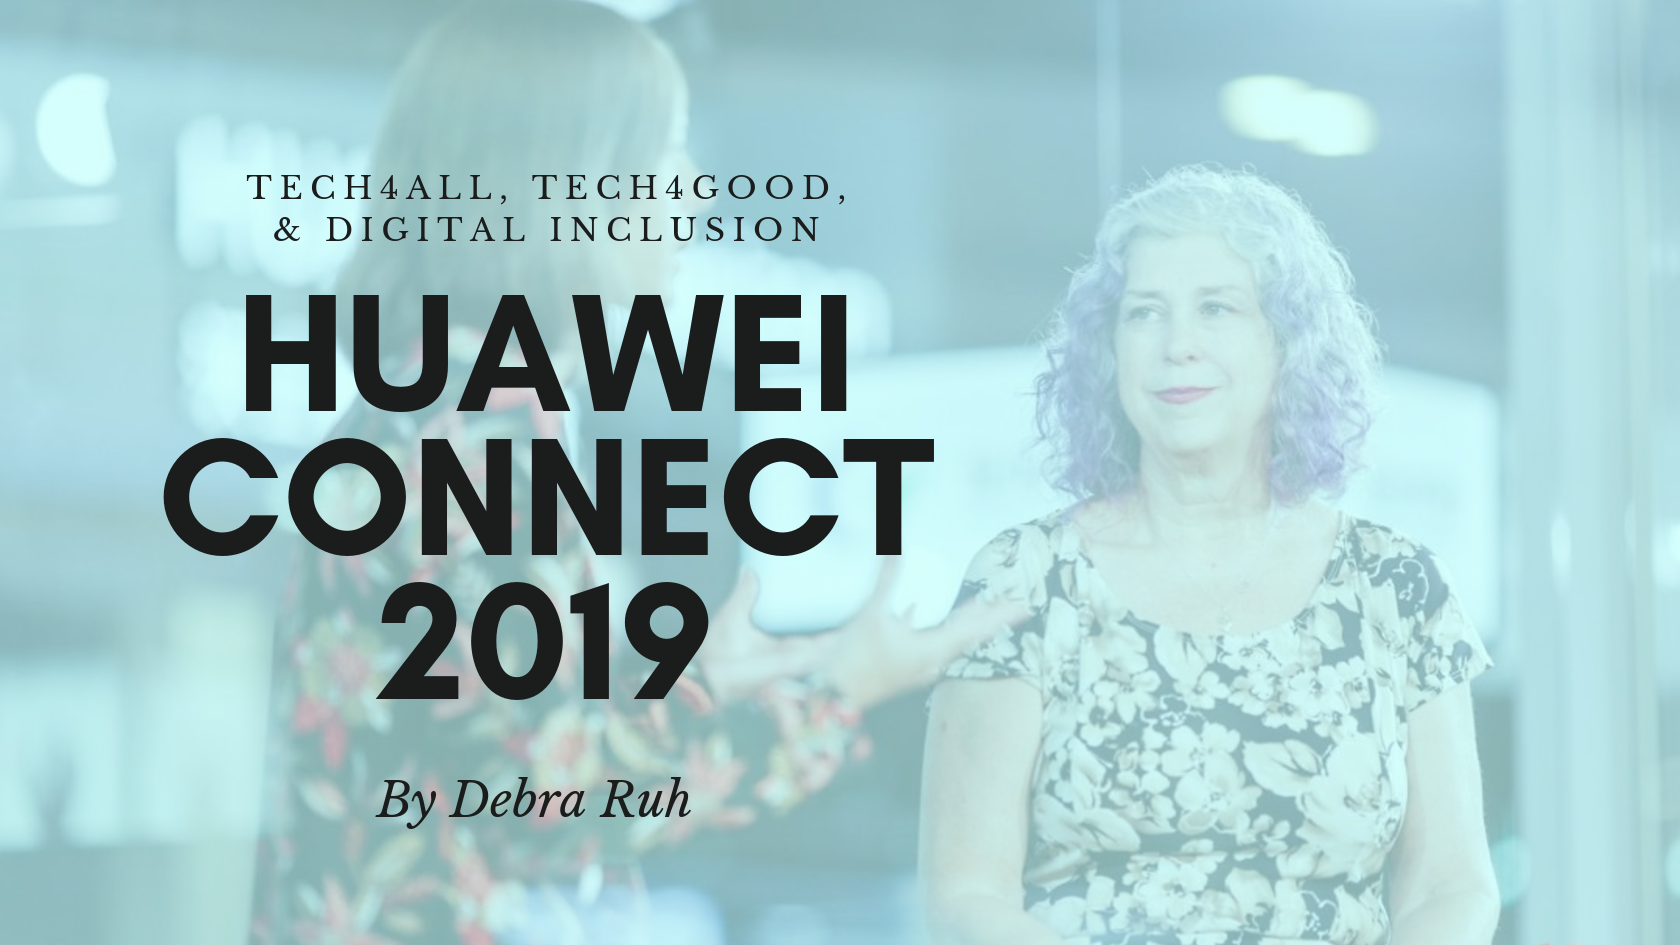 Huawei Connect 2019 / TECH4ALL, TECH4GOOD, & Digital Inclusion